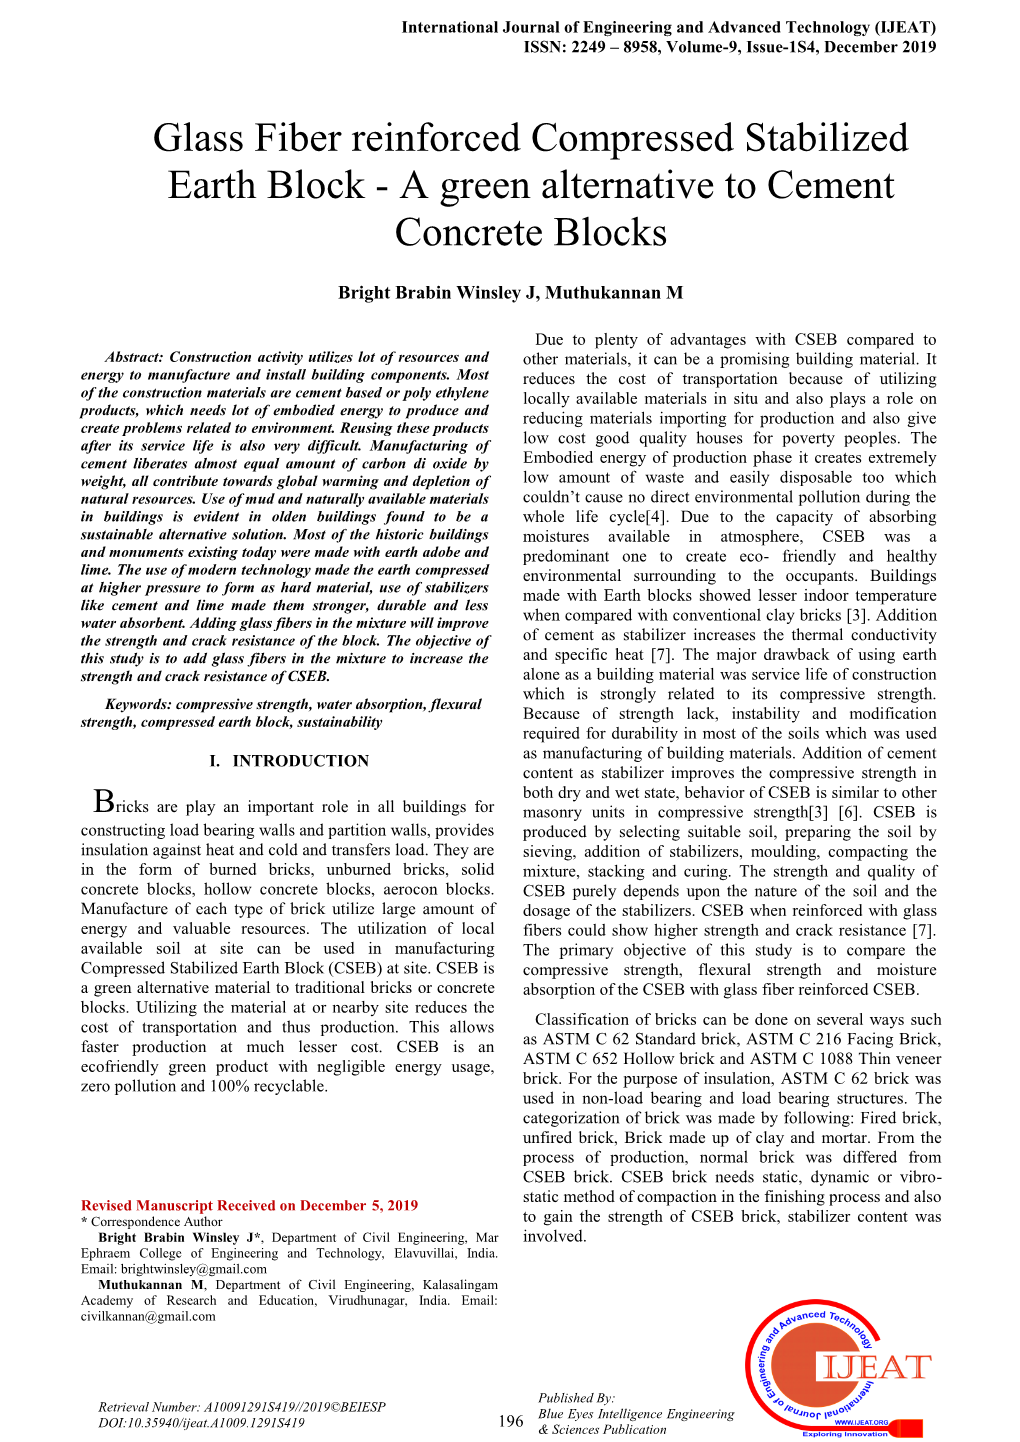 Glass Fiber Reinforced Compressed Stabilized Earth Block - a Green Alternative to Cement Concrete Blocks